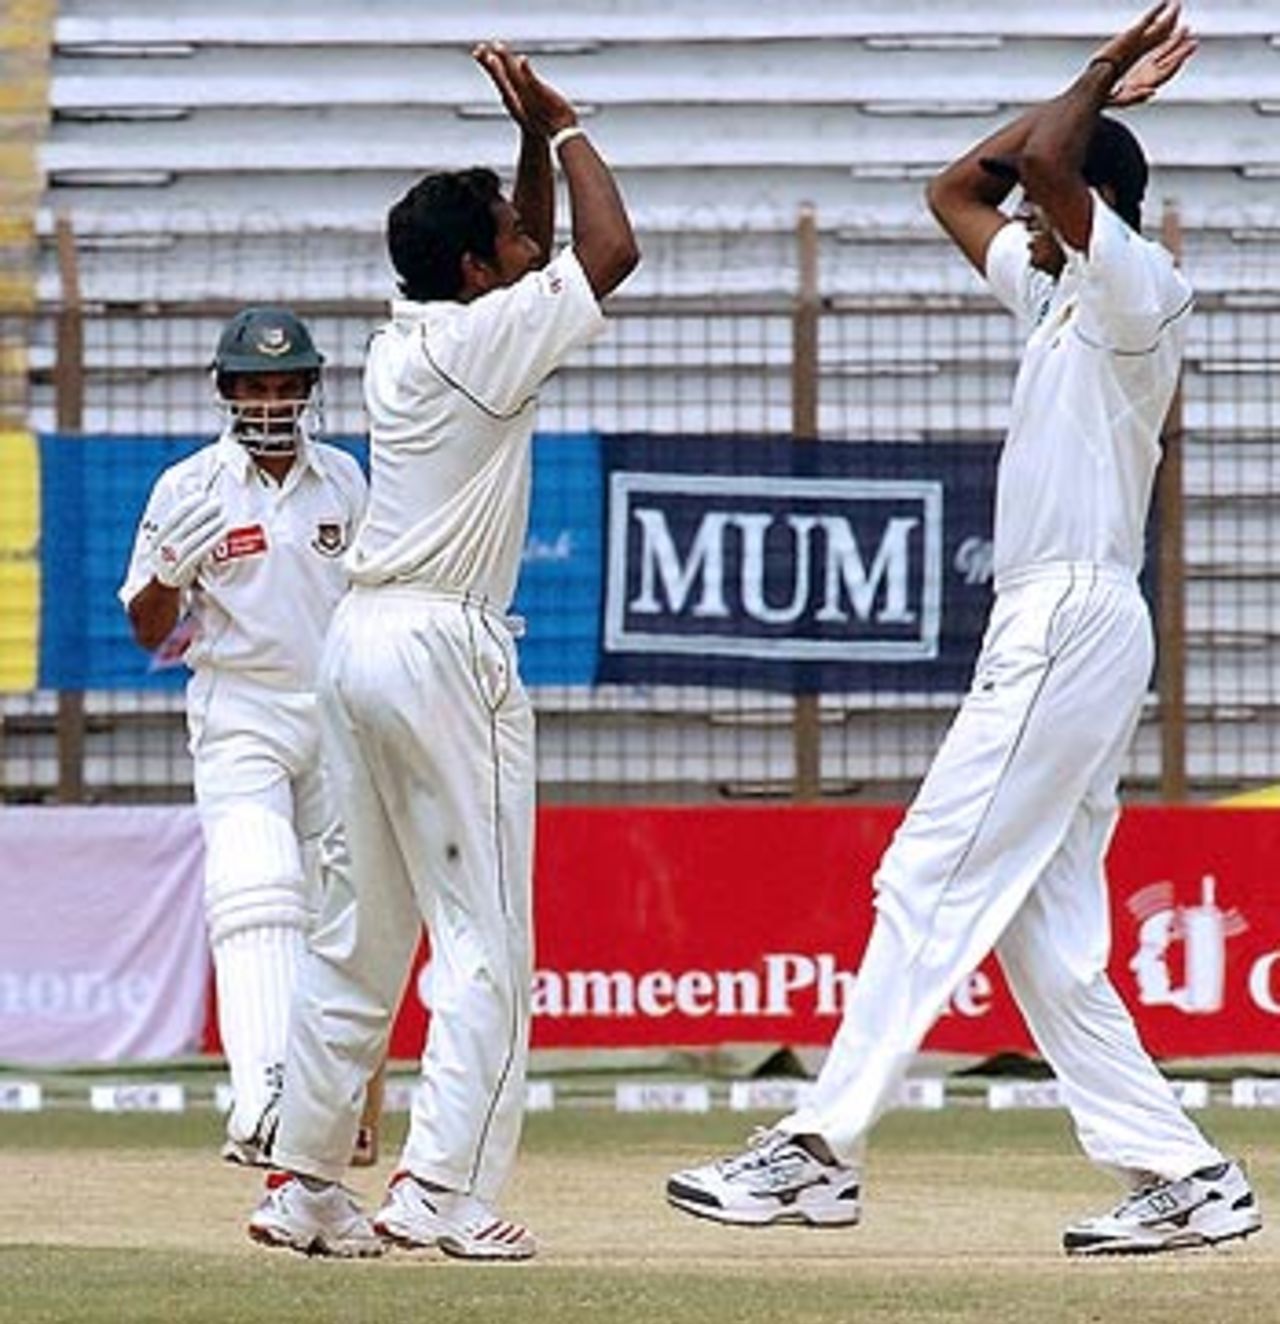 Malinga Bandara dismissed Habibul Bashar for the second time running, Bangladesh v Sri Lanka, 1st Test, Chittagong, 3rd day, March 2, 2006